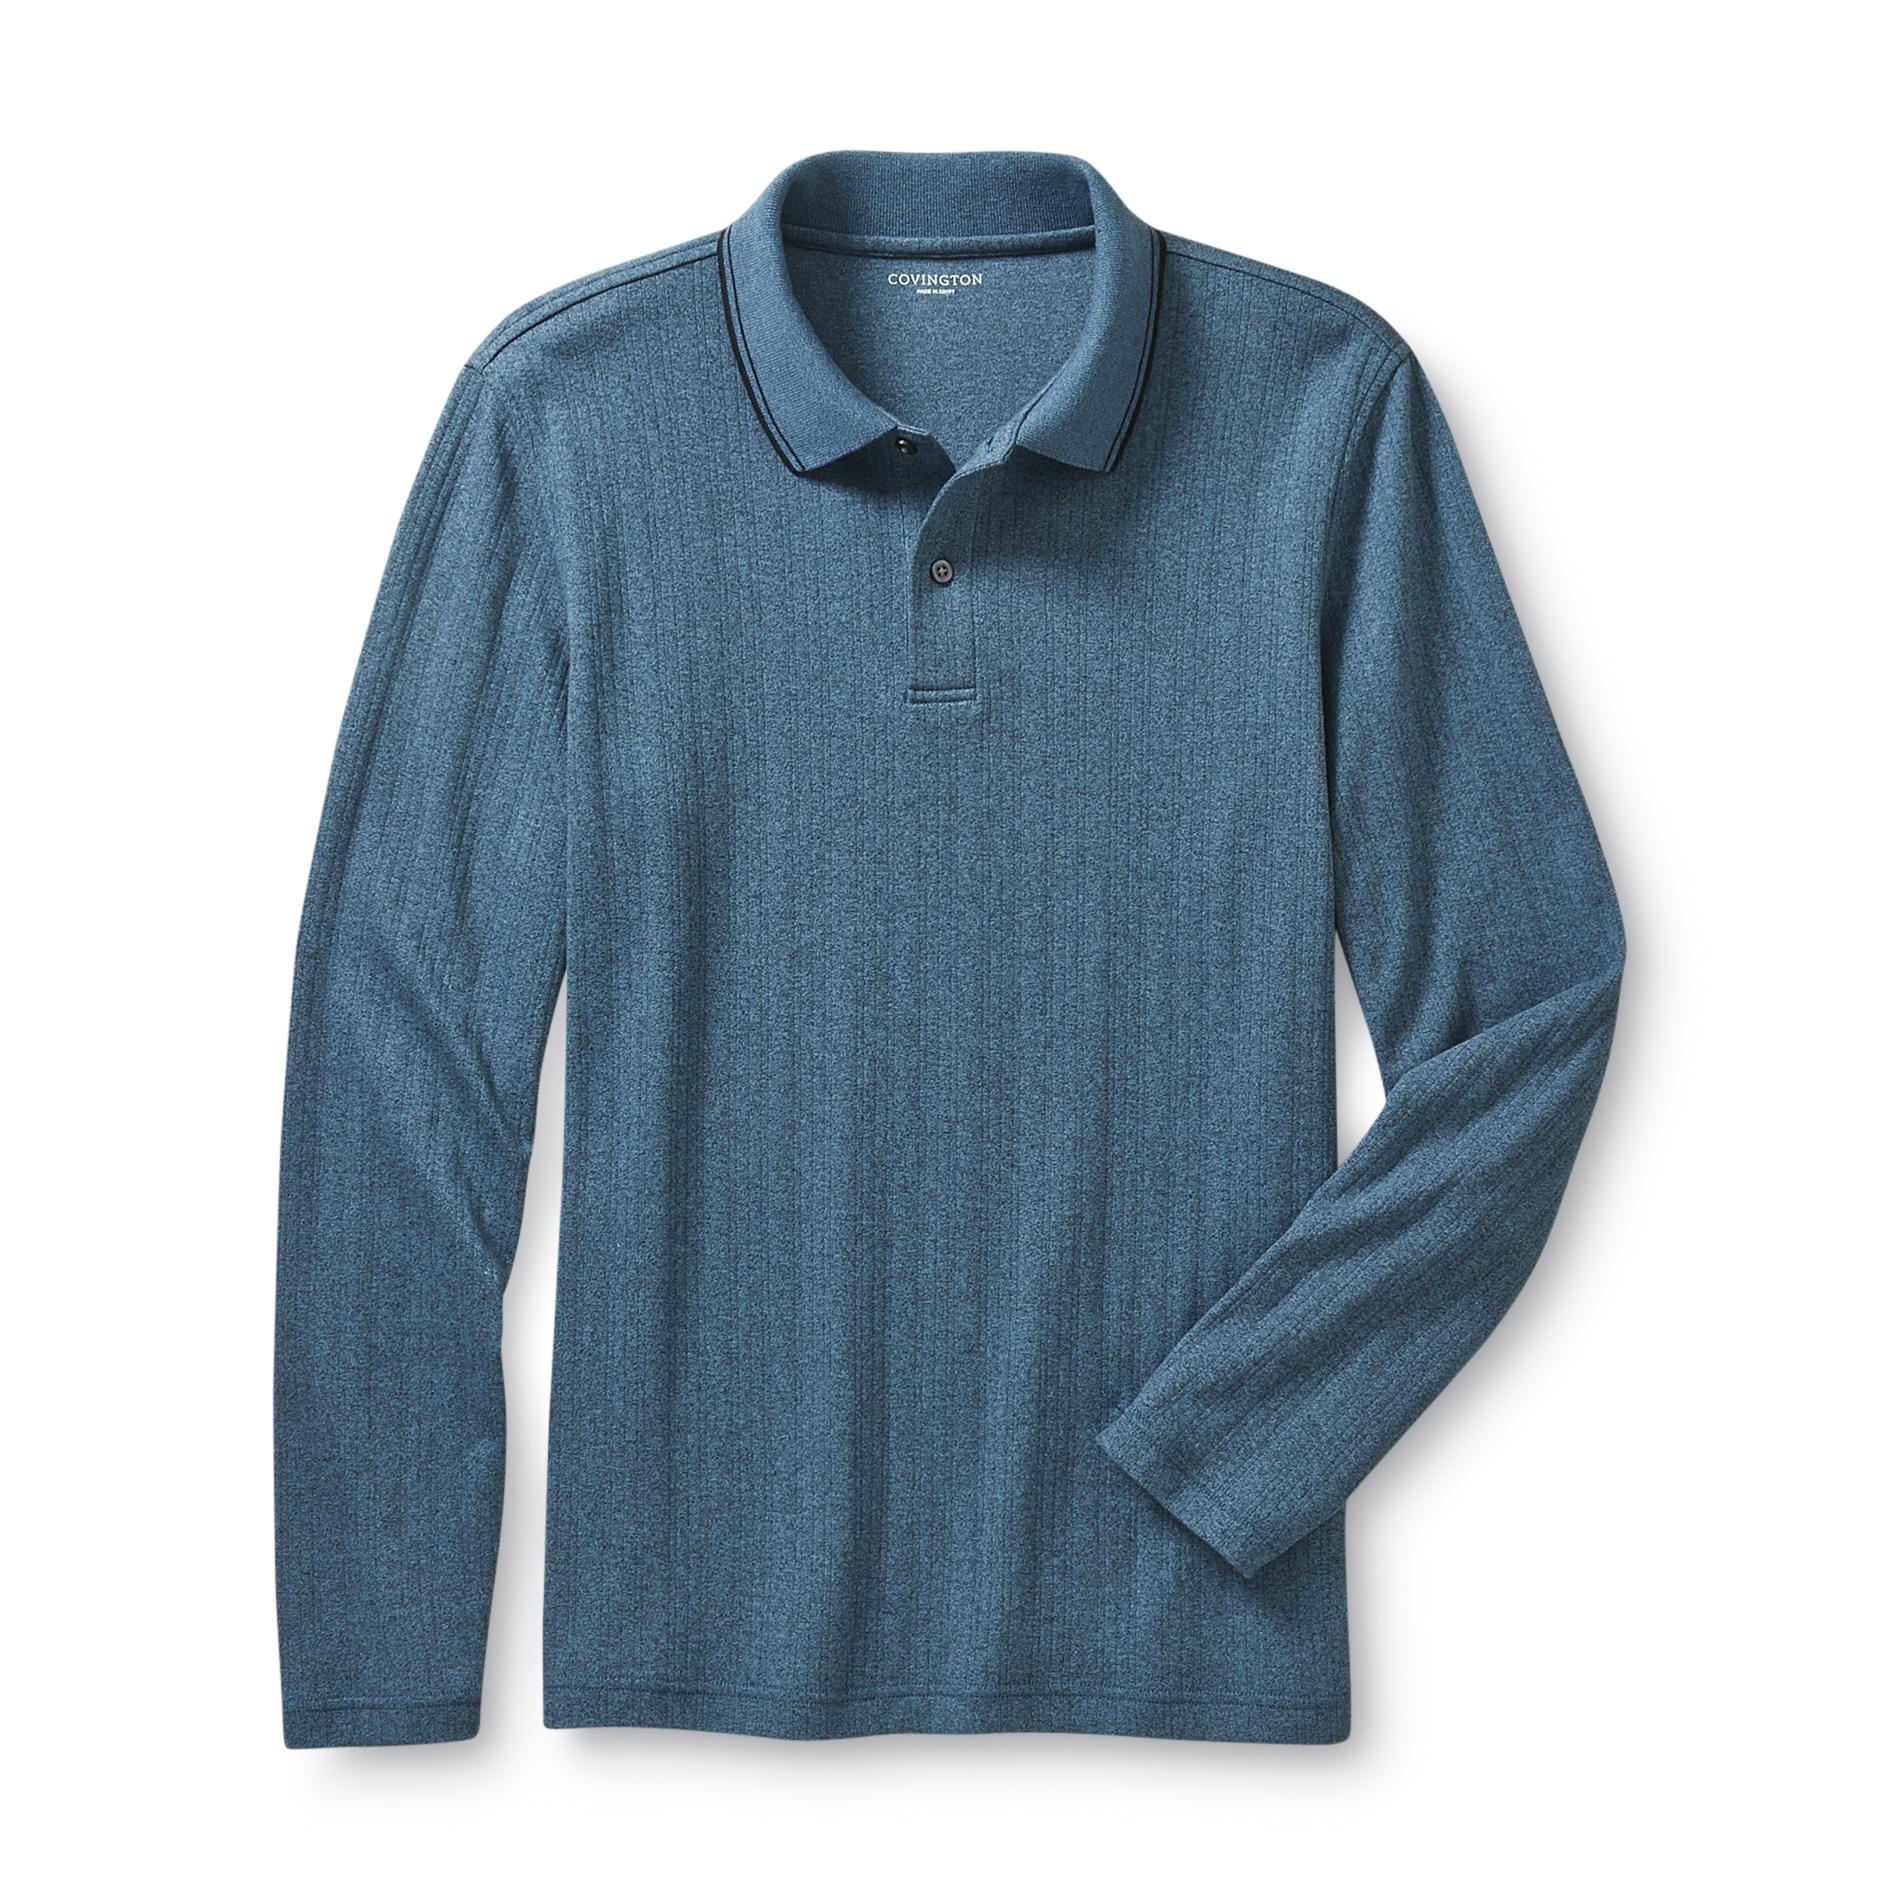 Covington Men's Big & Tall Long-Sleeve Polo Shirt